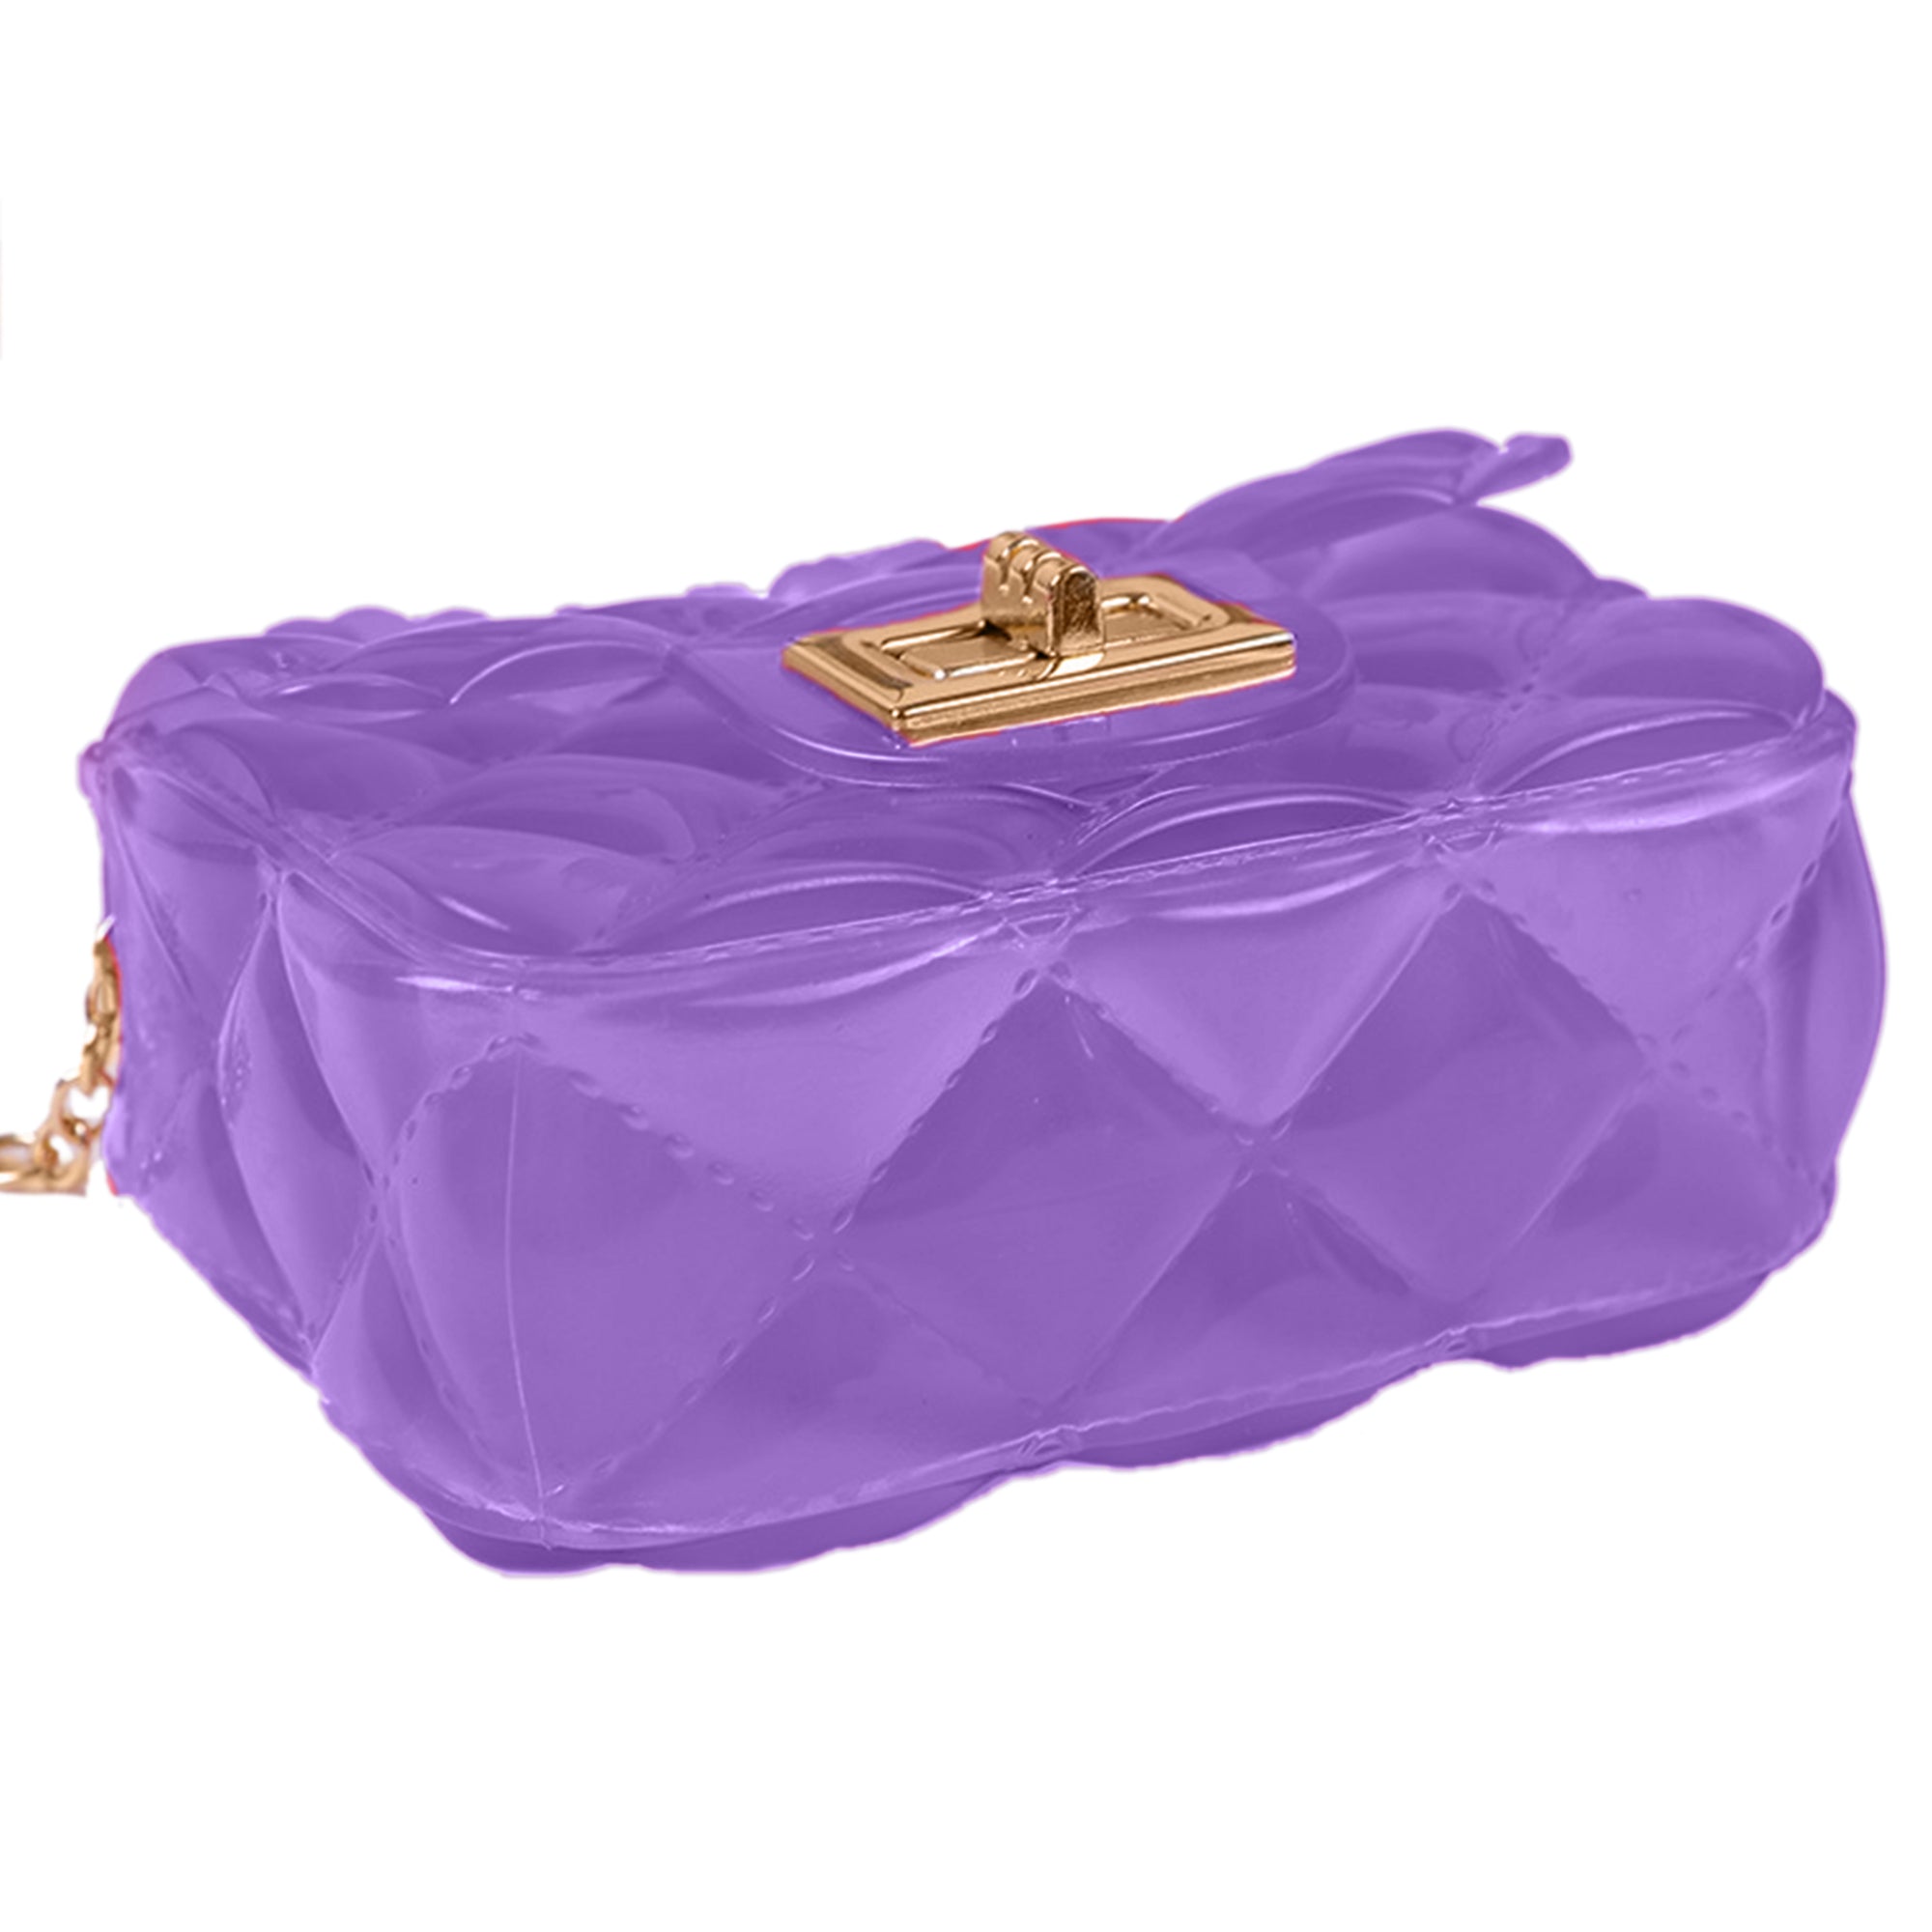 Buy DEEKEY Little Girls Purses for Kids - Toddler Mini Cute Princess  Handbags Shoulder Messenger Bag Toys Gifts Crossbody Purse (Butterfly Purple)  at Amazon.in